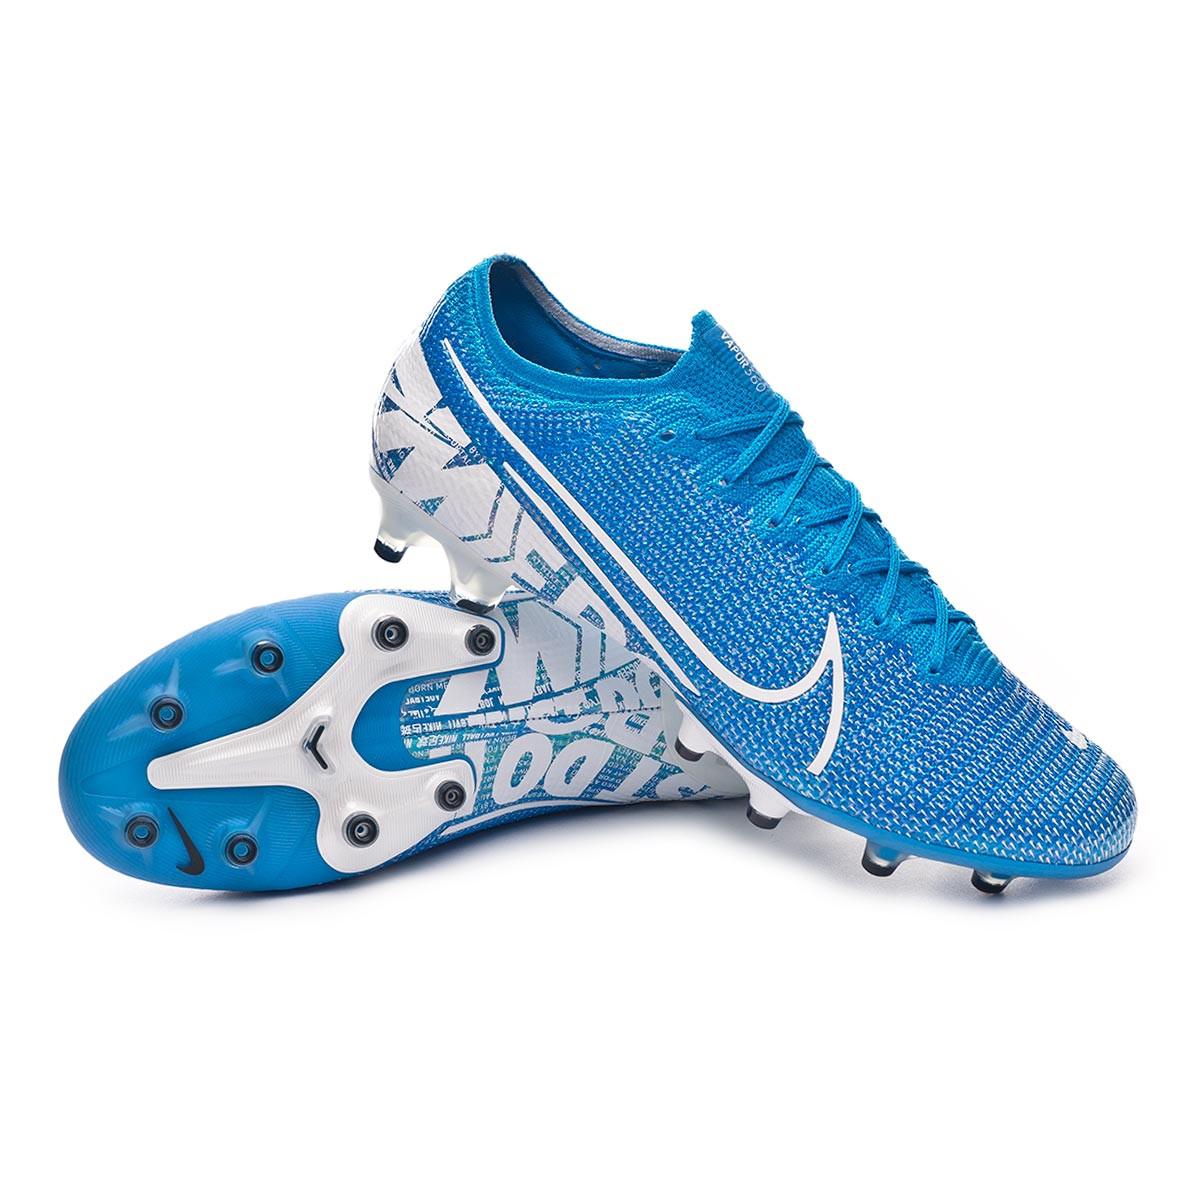 Football Boots Nike Mercurial Vapor XIII Elite AG-Pro Blue  hero-White-Volt-Obsidian - Football store Fútbol Emotion